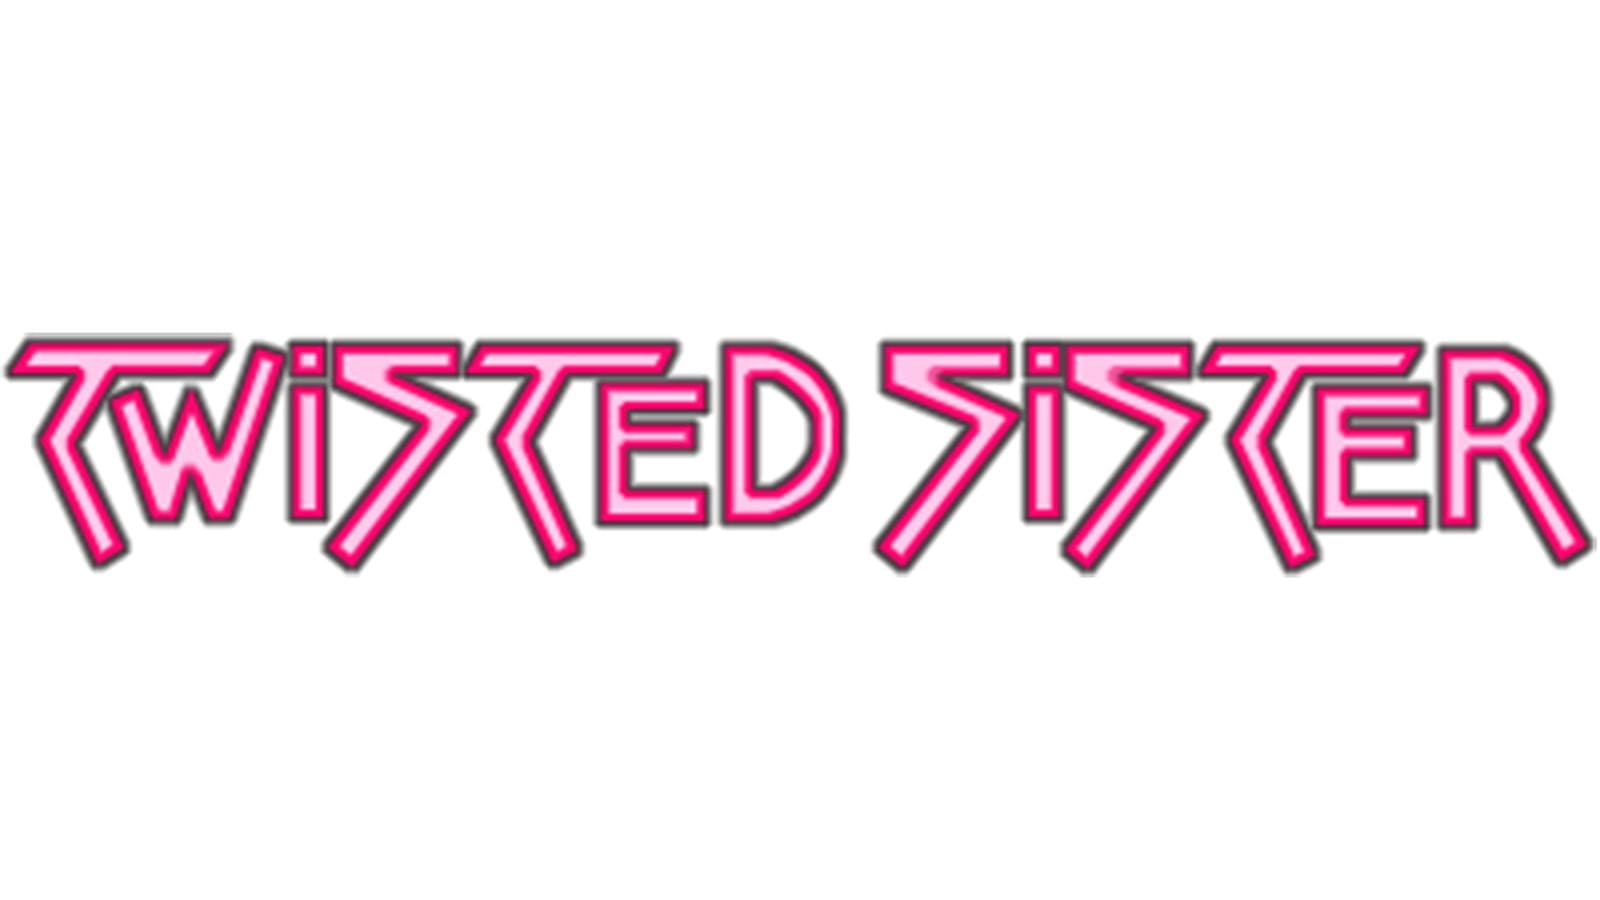 Twisted Sister Logo Wallpaper